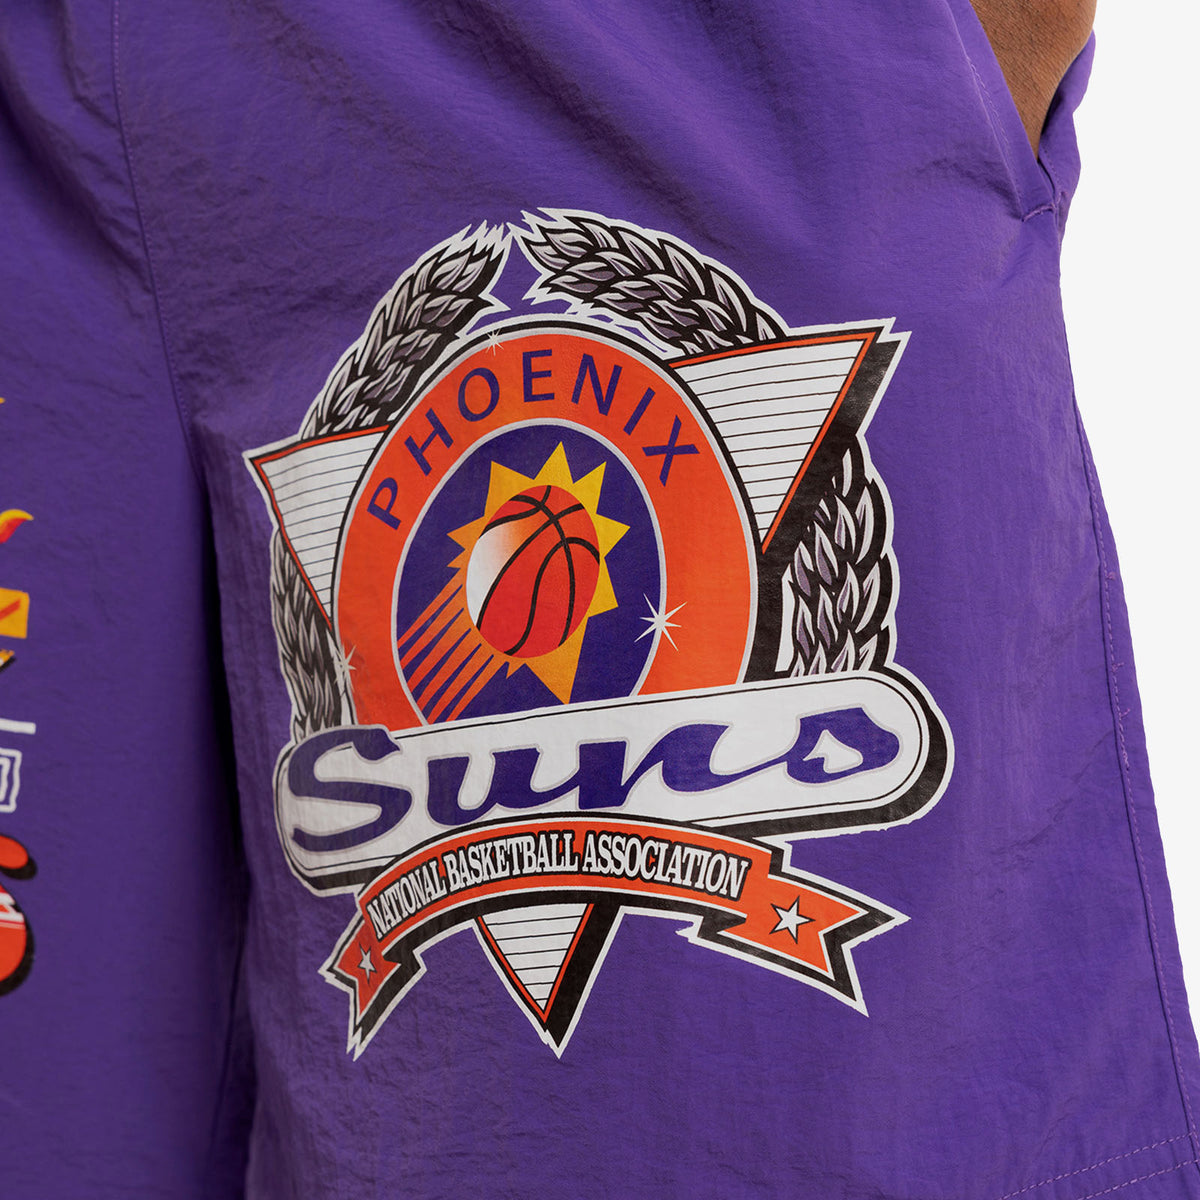 Phoenix Suns Sun Rays Shorts - Purple